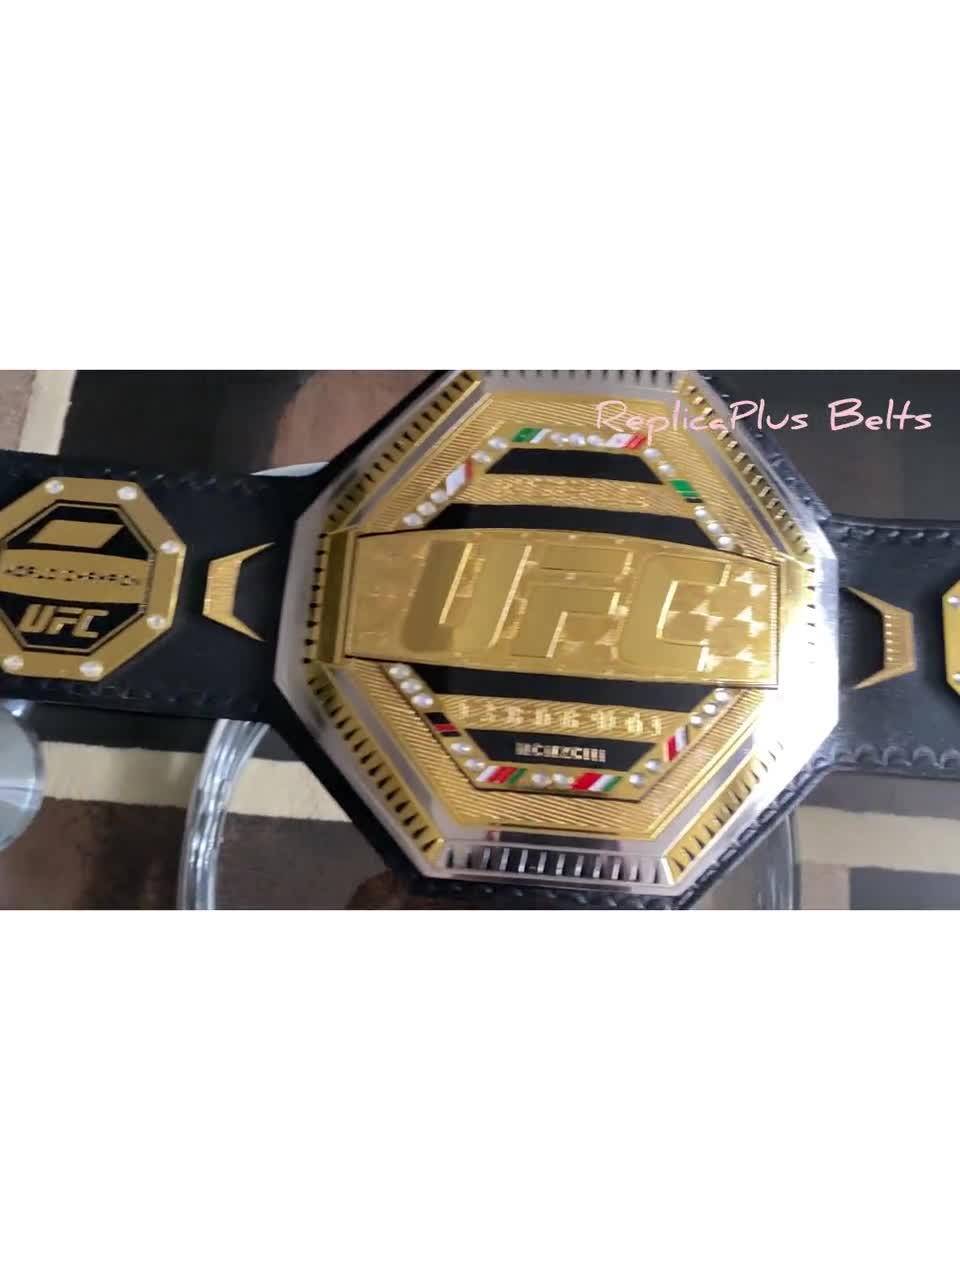 UFC Ultimate Fighting Ringen Champions Titel Gürtel Leder Replik Metall Platten 